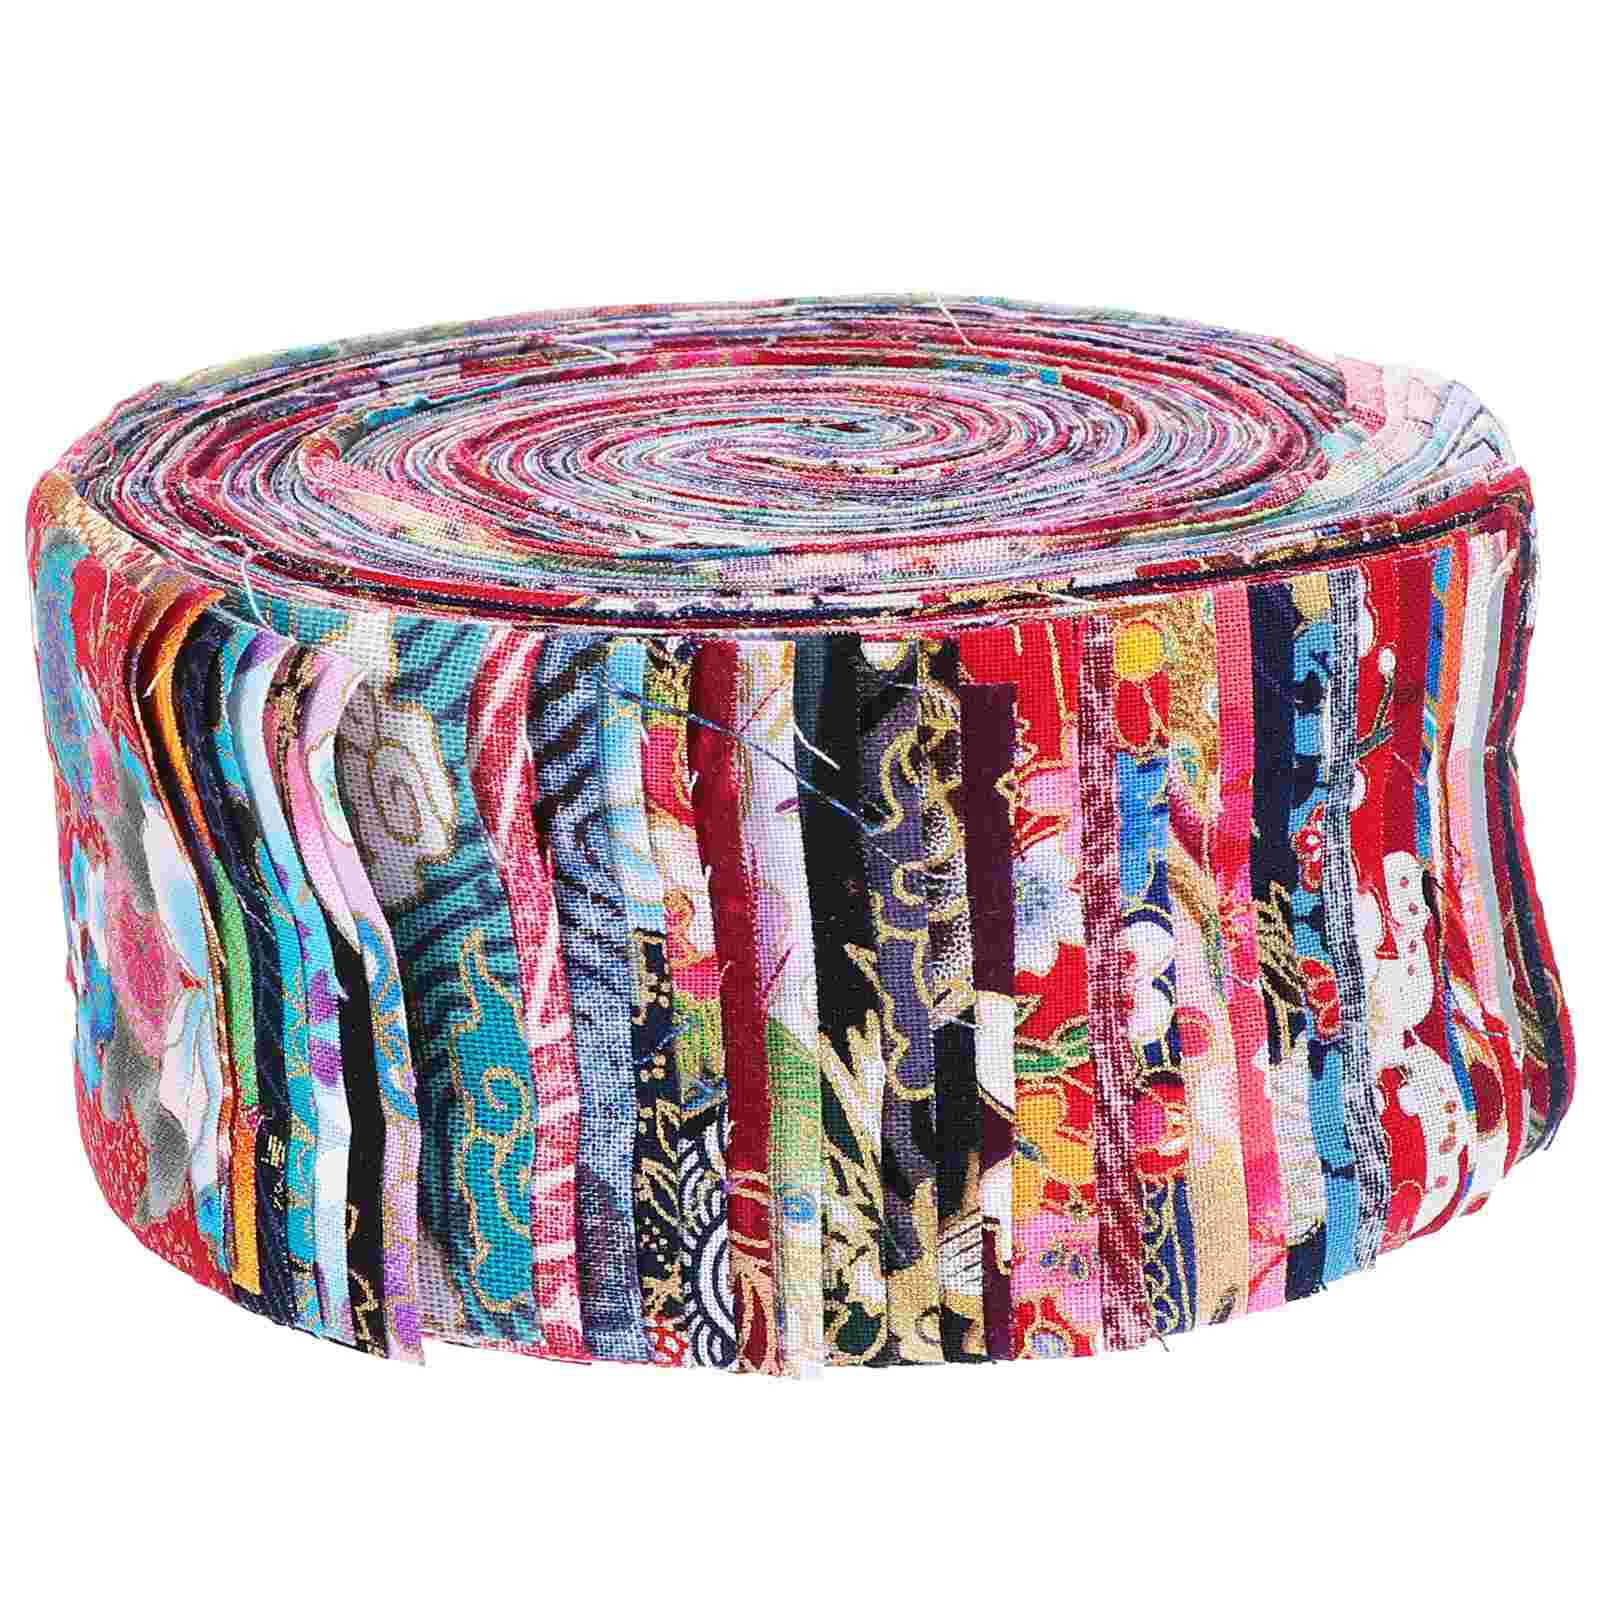 

36 Pcs Strip Cloth Group Patchwork DIY Craft Bundle Wedding Scrapbook Cotton Fabric Material Handmade Gifts Quilting Sewing